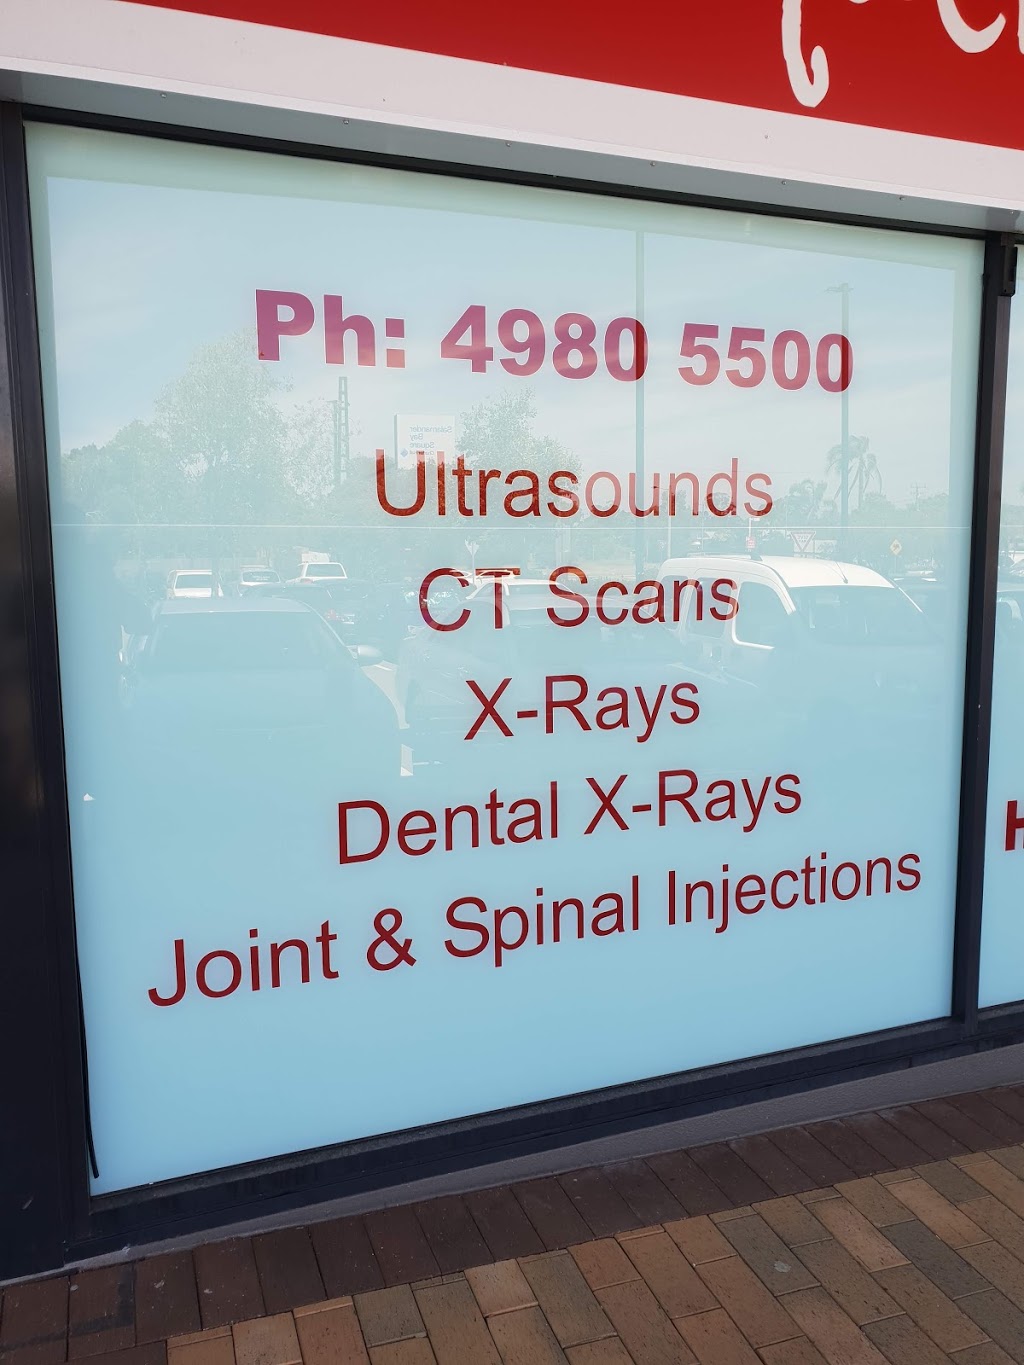 Hunter Radiology | health | Shop 2/2 Town Centre Circuit, Salamander Bay NSW 2317, Australia | 0249805500 OR +61 2 4980 5500